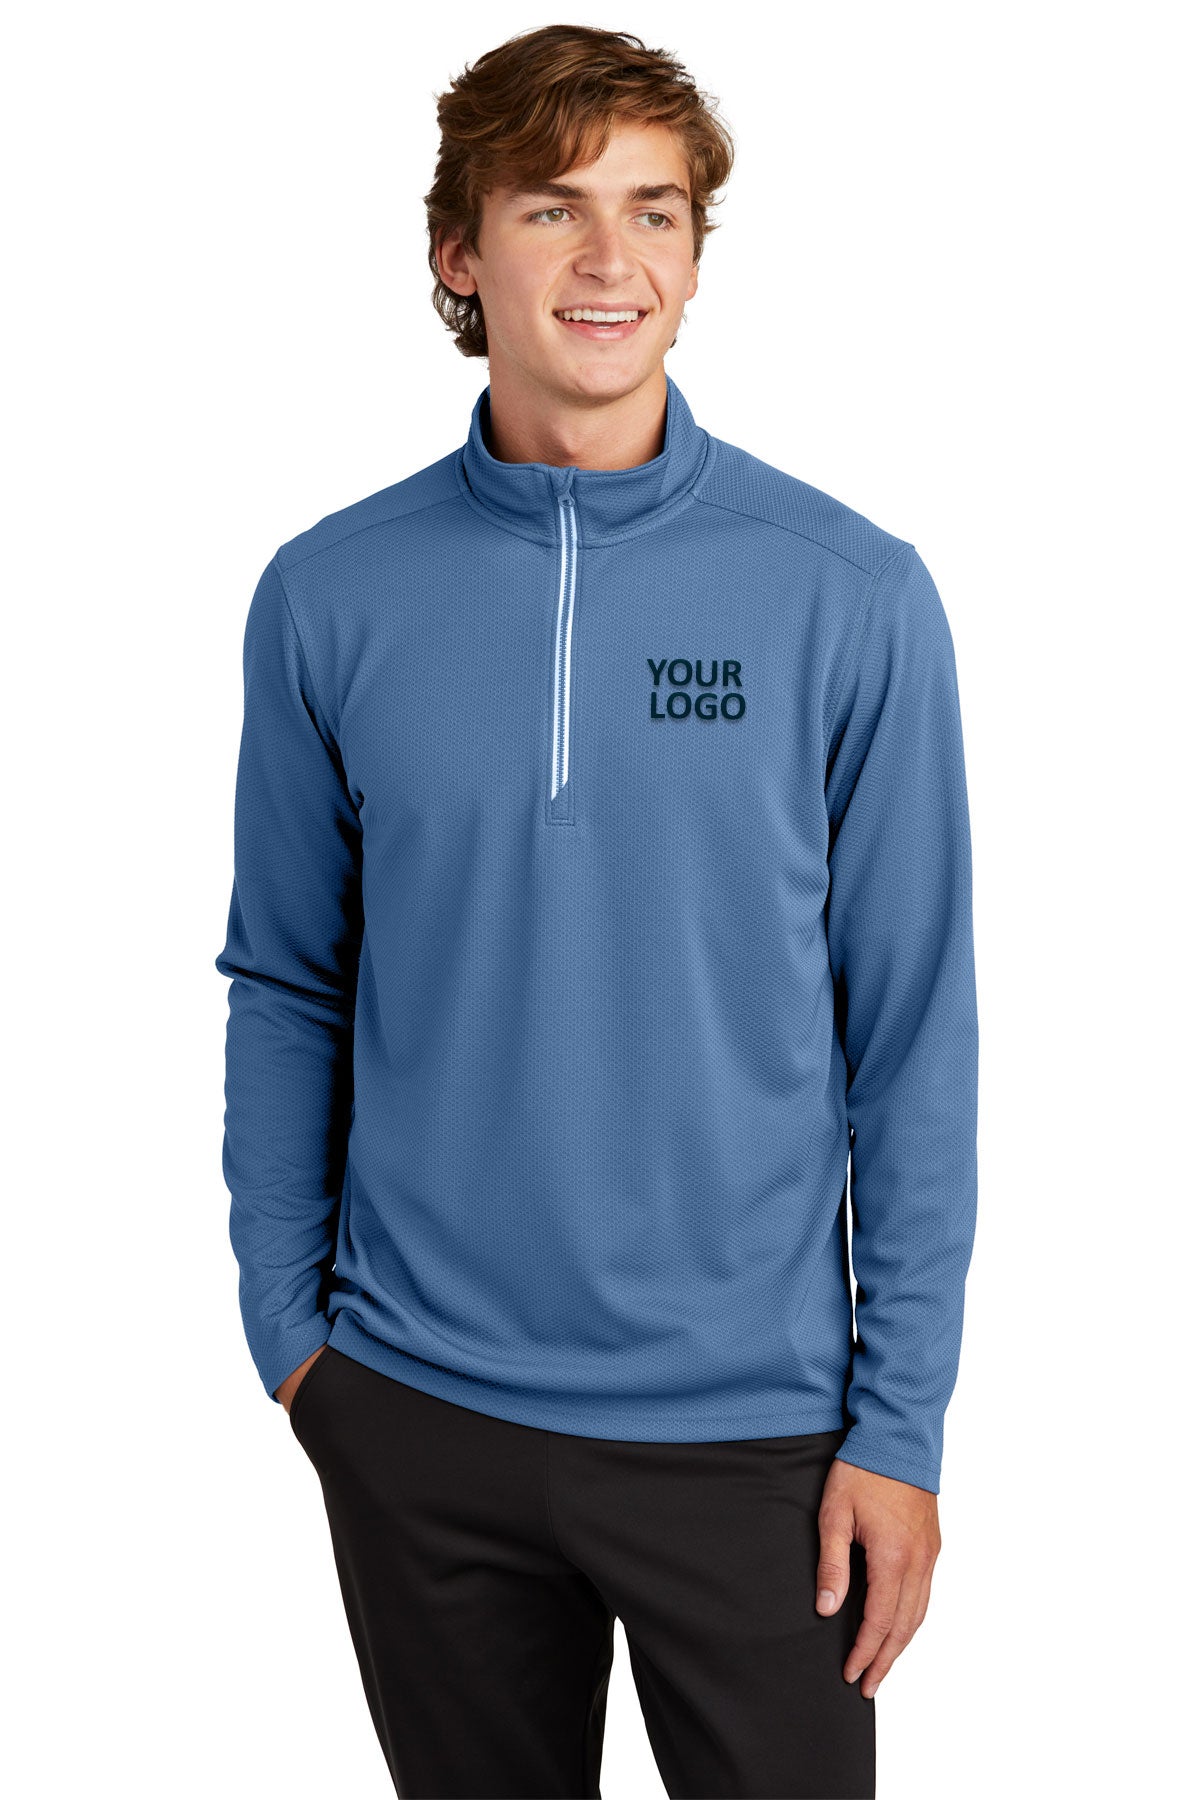 Sport-Tek Dawn Blue ST860 sweatshirts with company logo